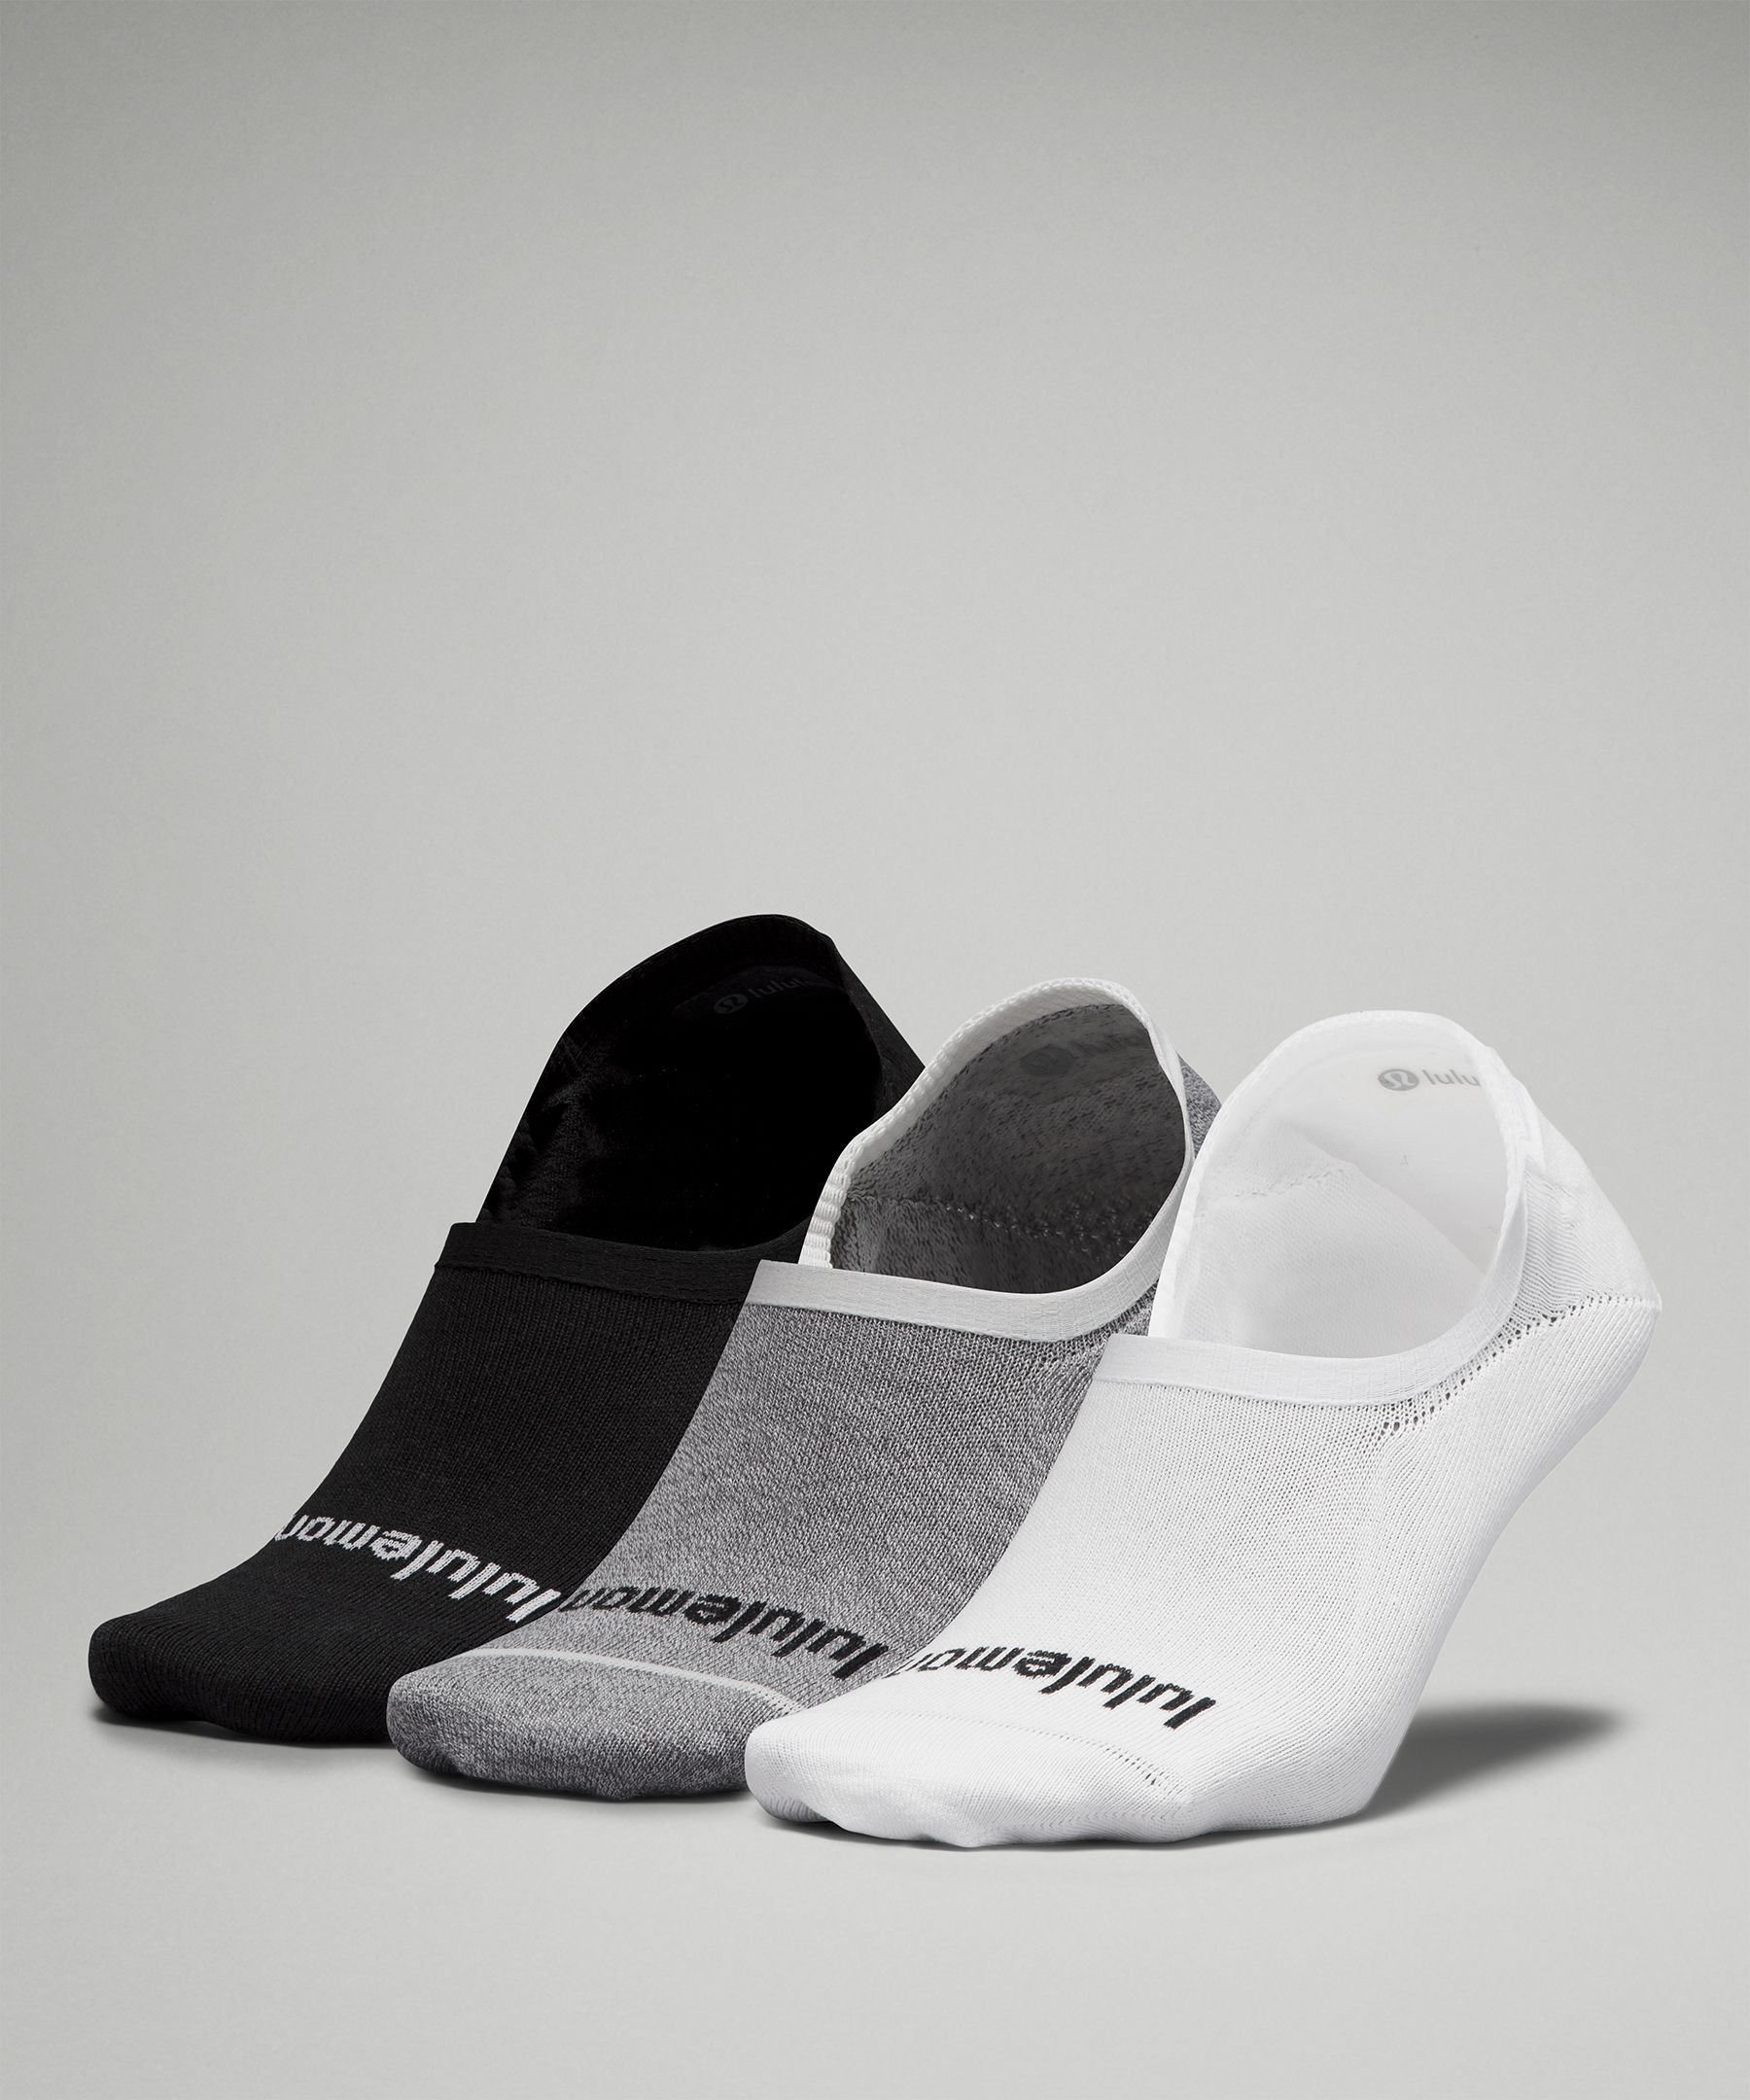 Unisex Performance Cotton Unseen Liner Socks 3 Pack - New Balance